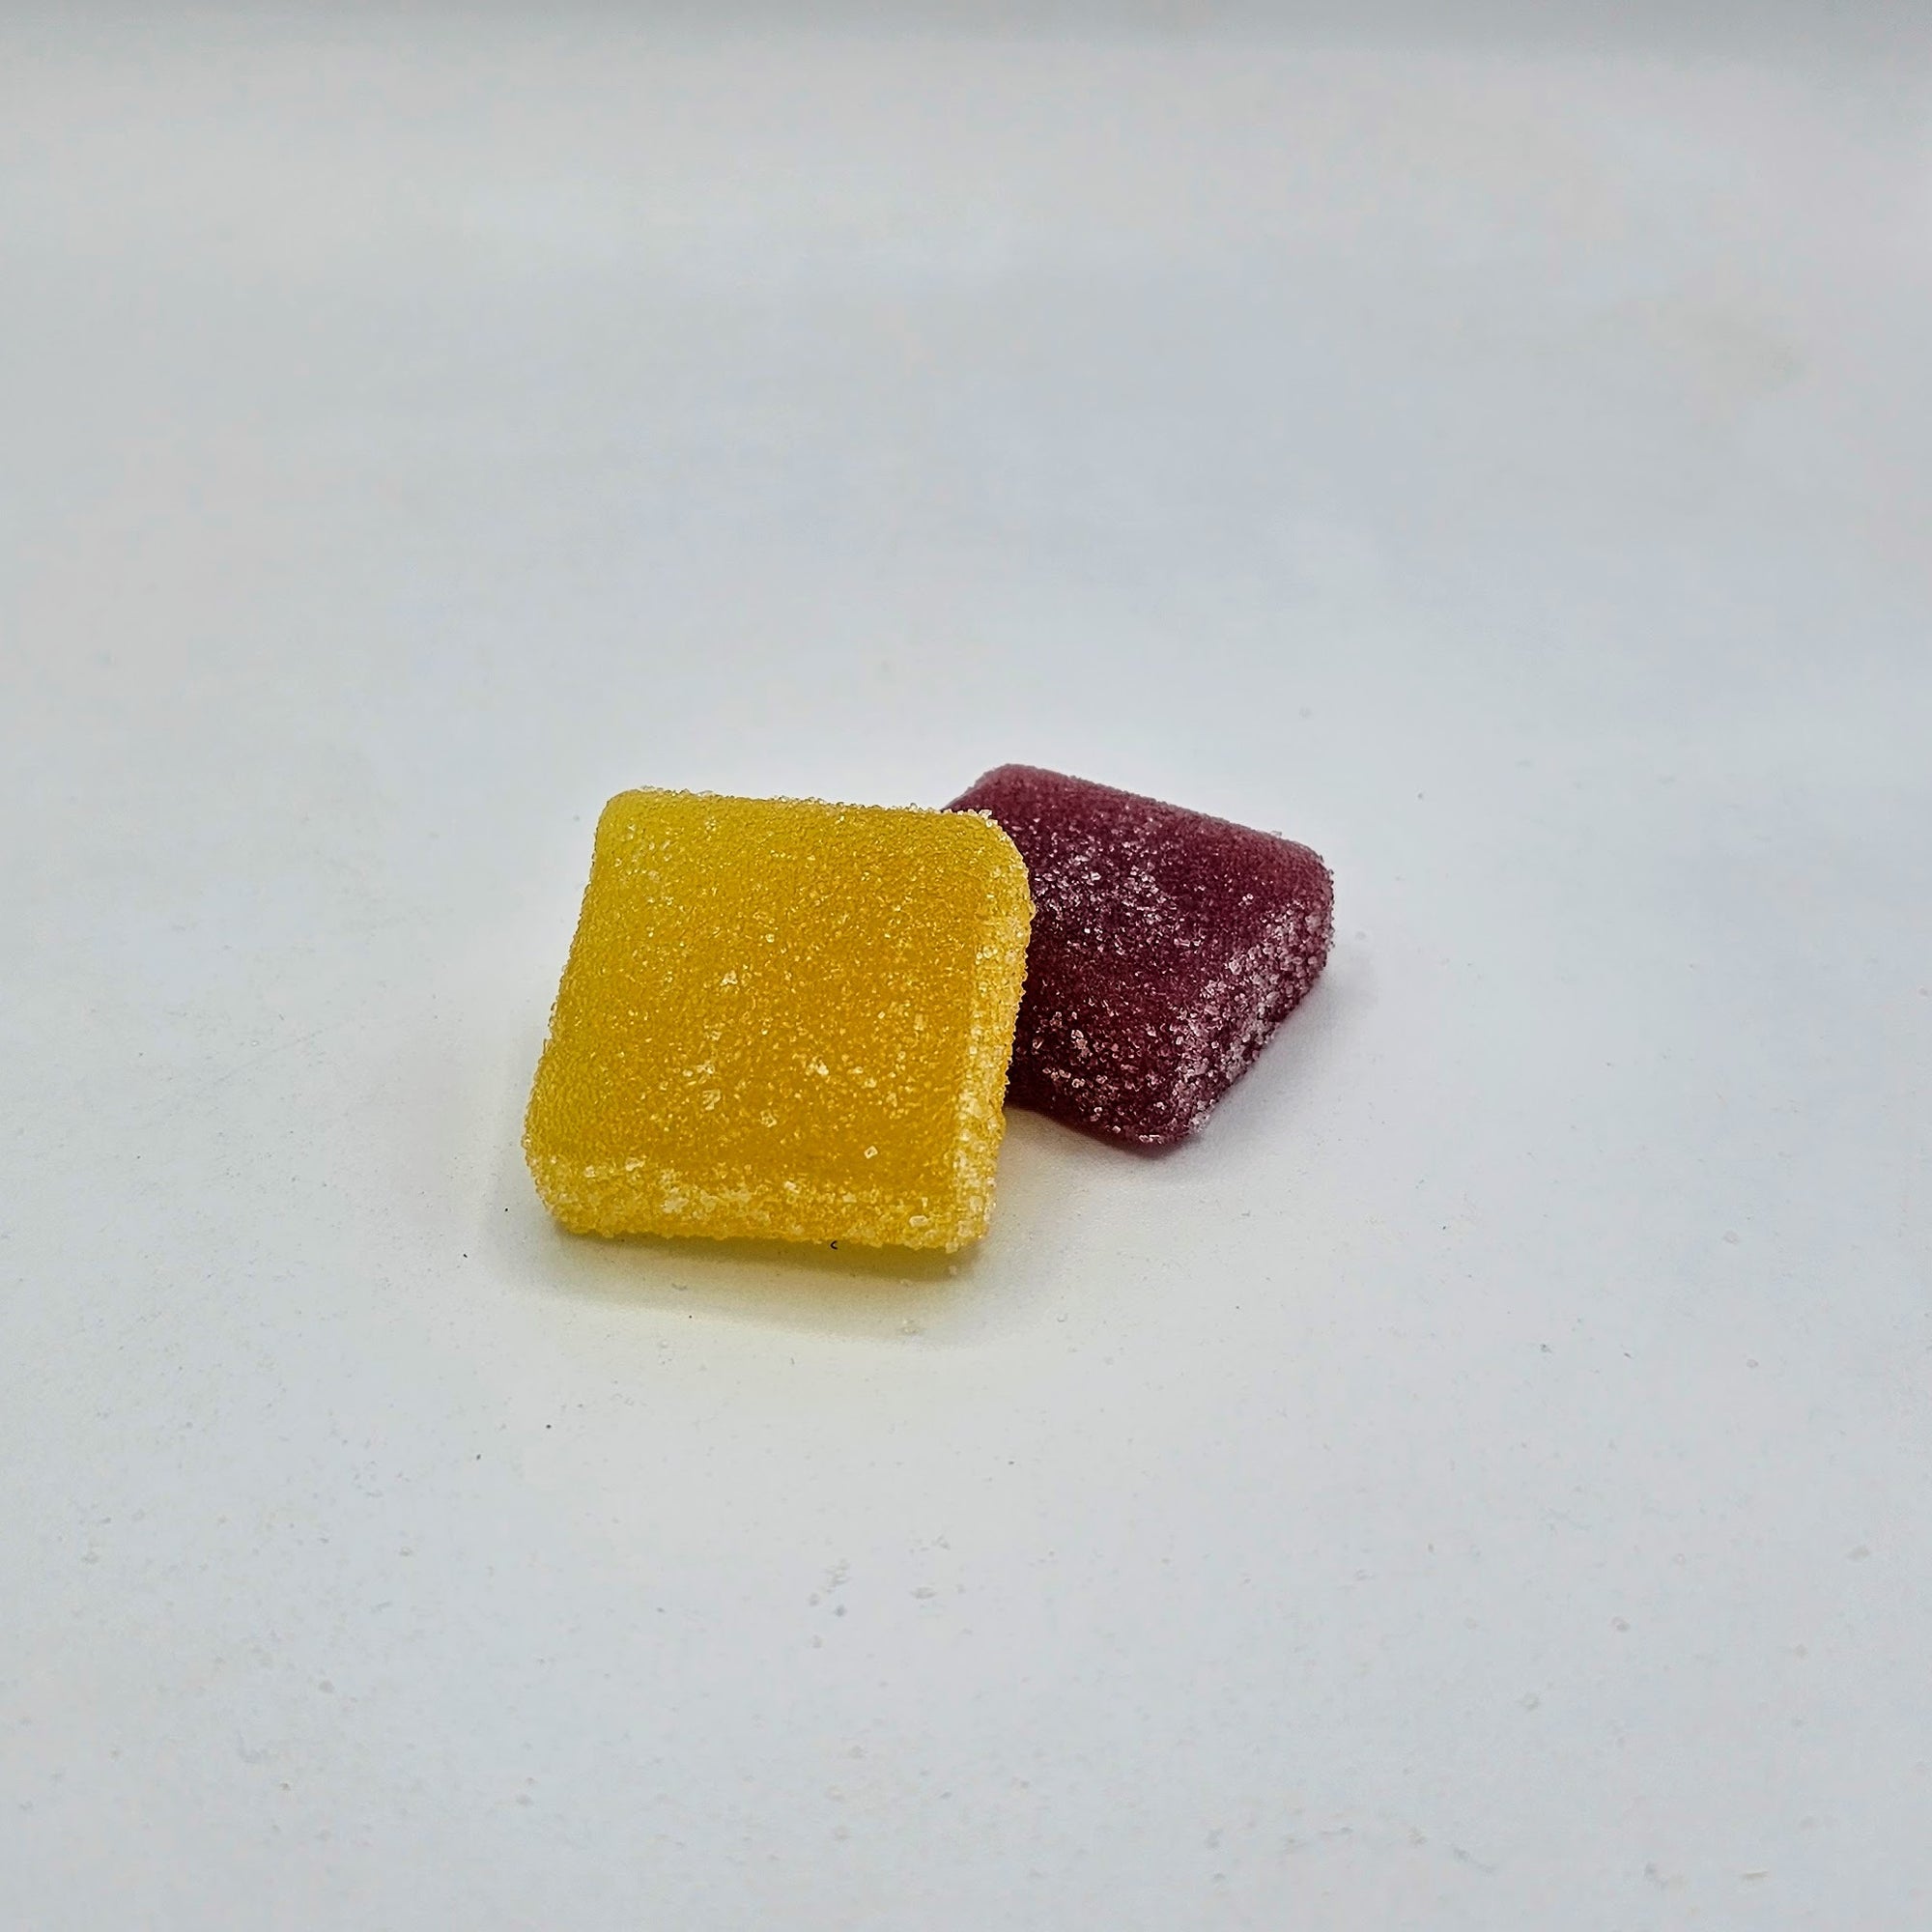 Euphoric D9 Trial Pack 50mg - Mixed Fruit Gummy - 1 Count - devmfg